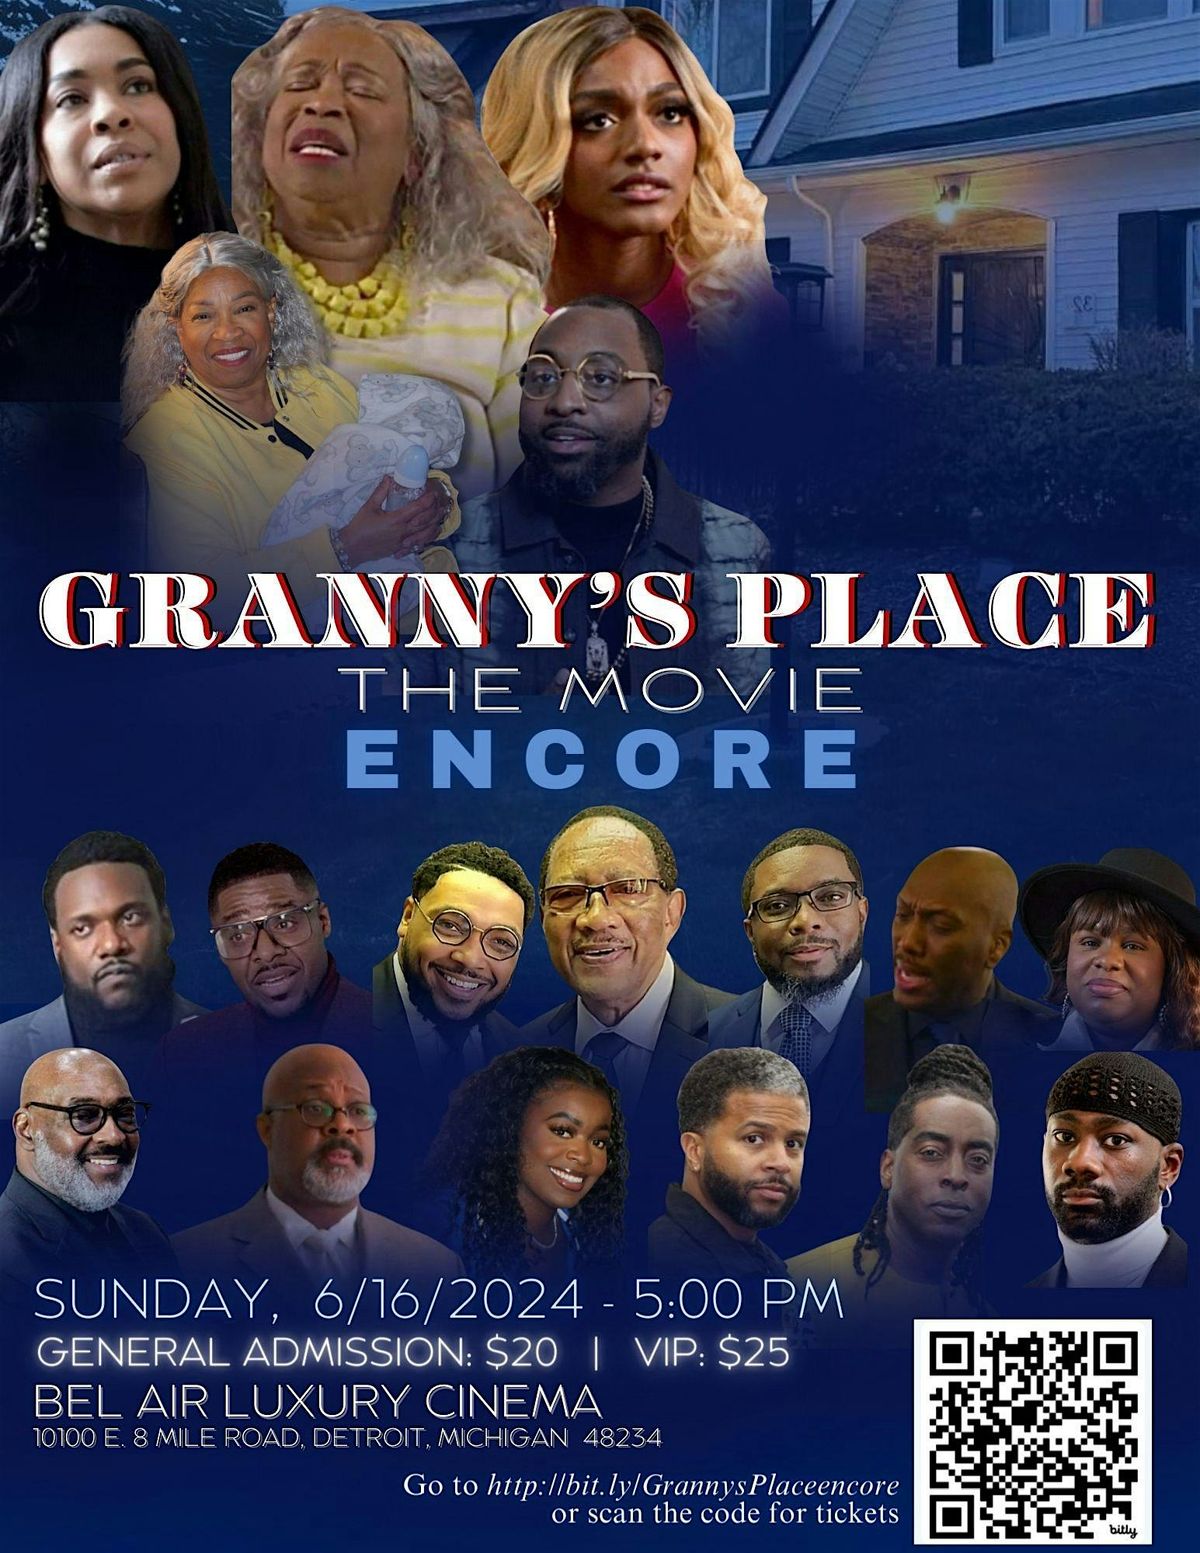 Granny's Place The Movie "Encore"